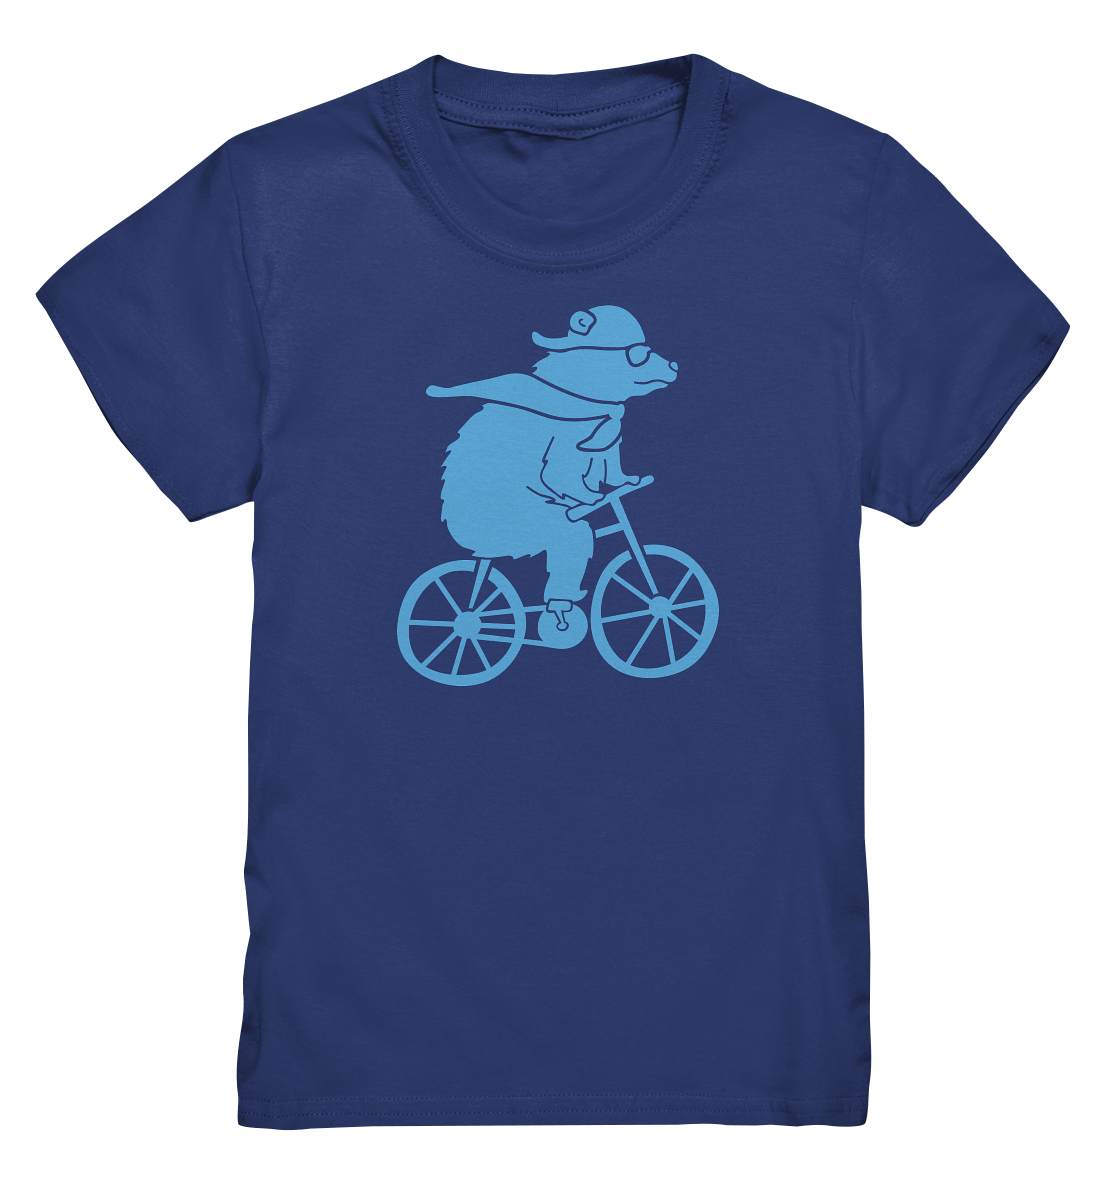 Cyclobear - Kids Premium Shirt